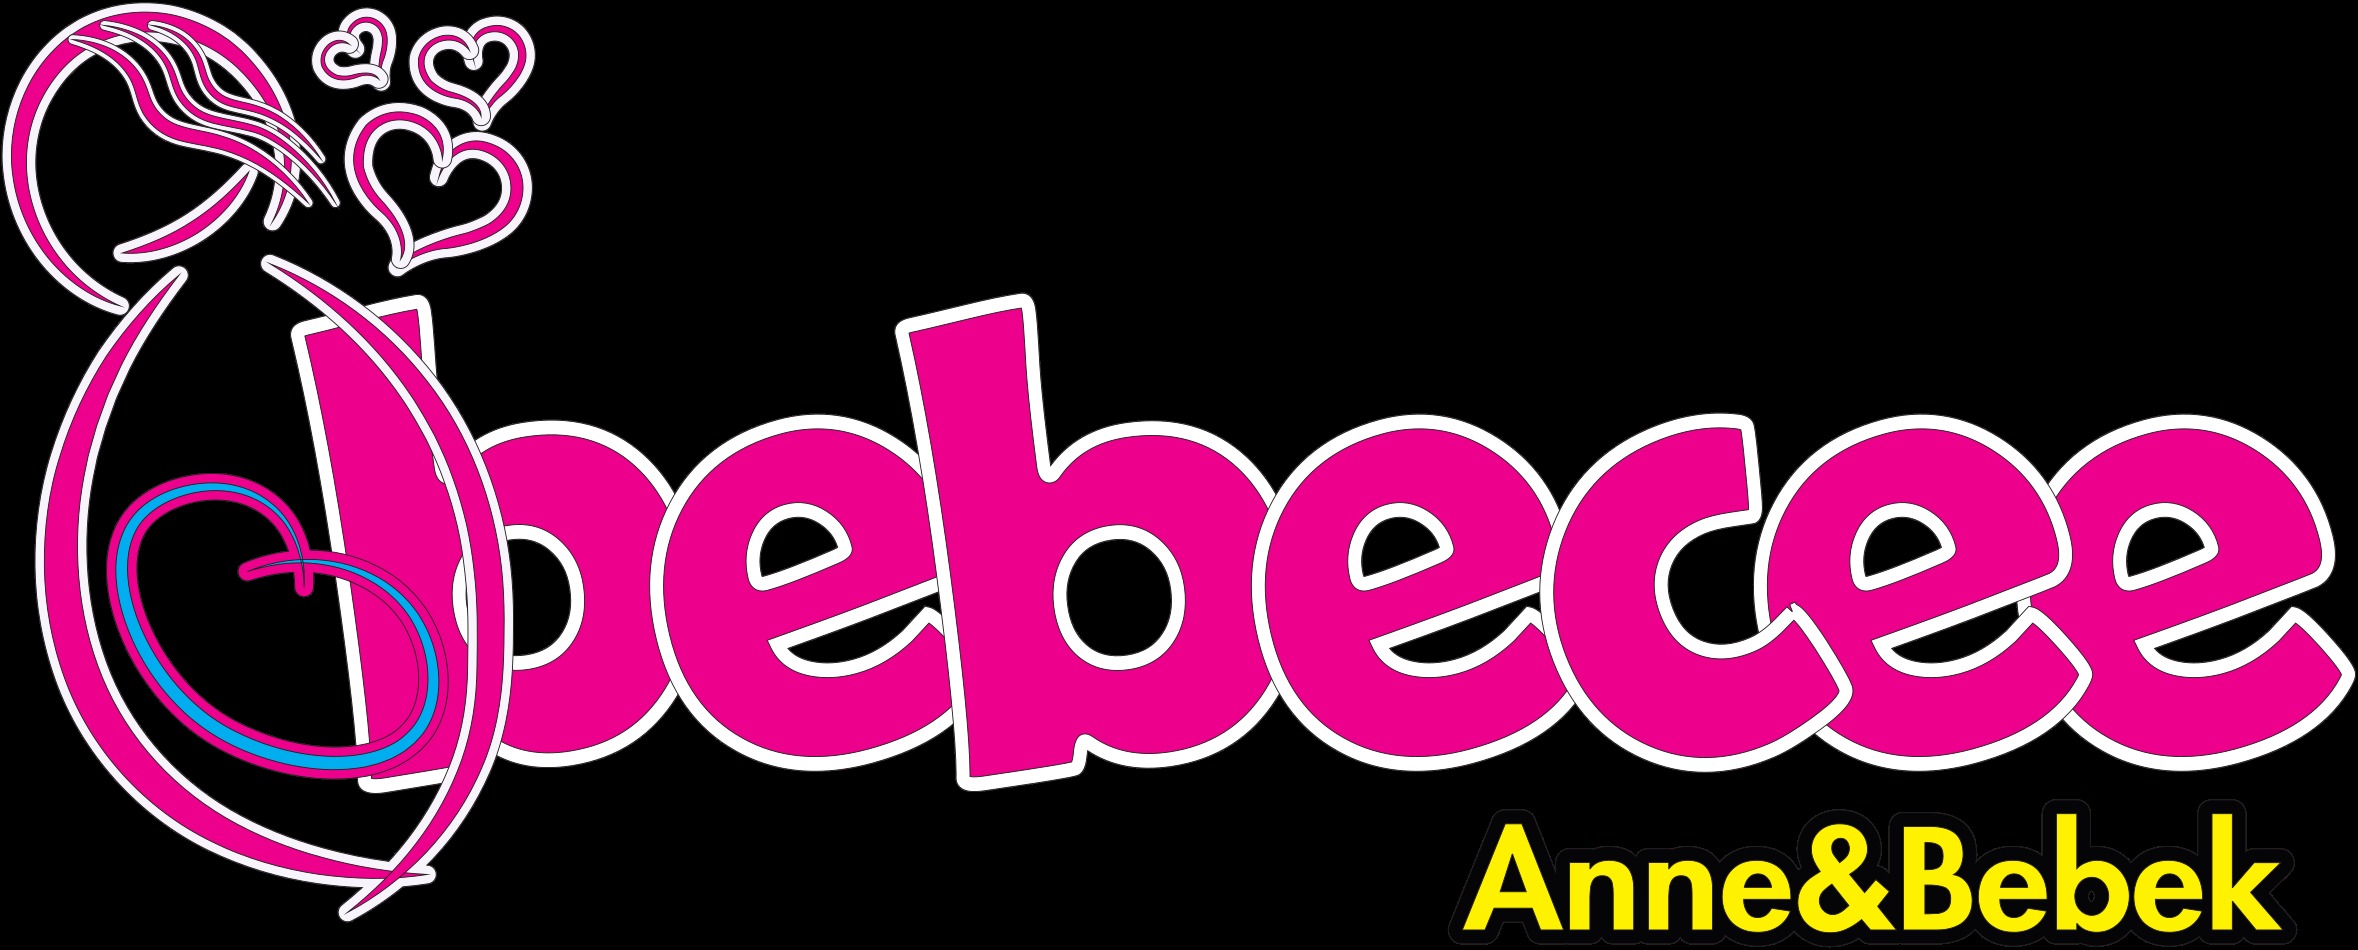 bebecee